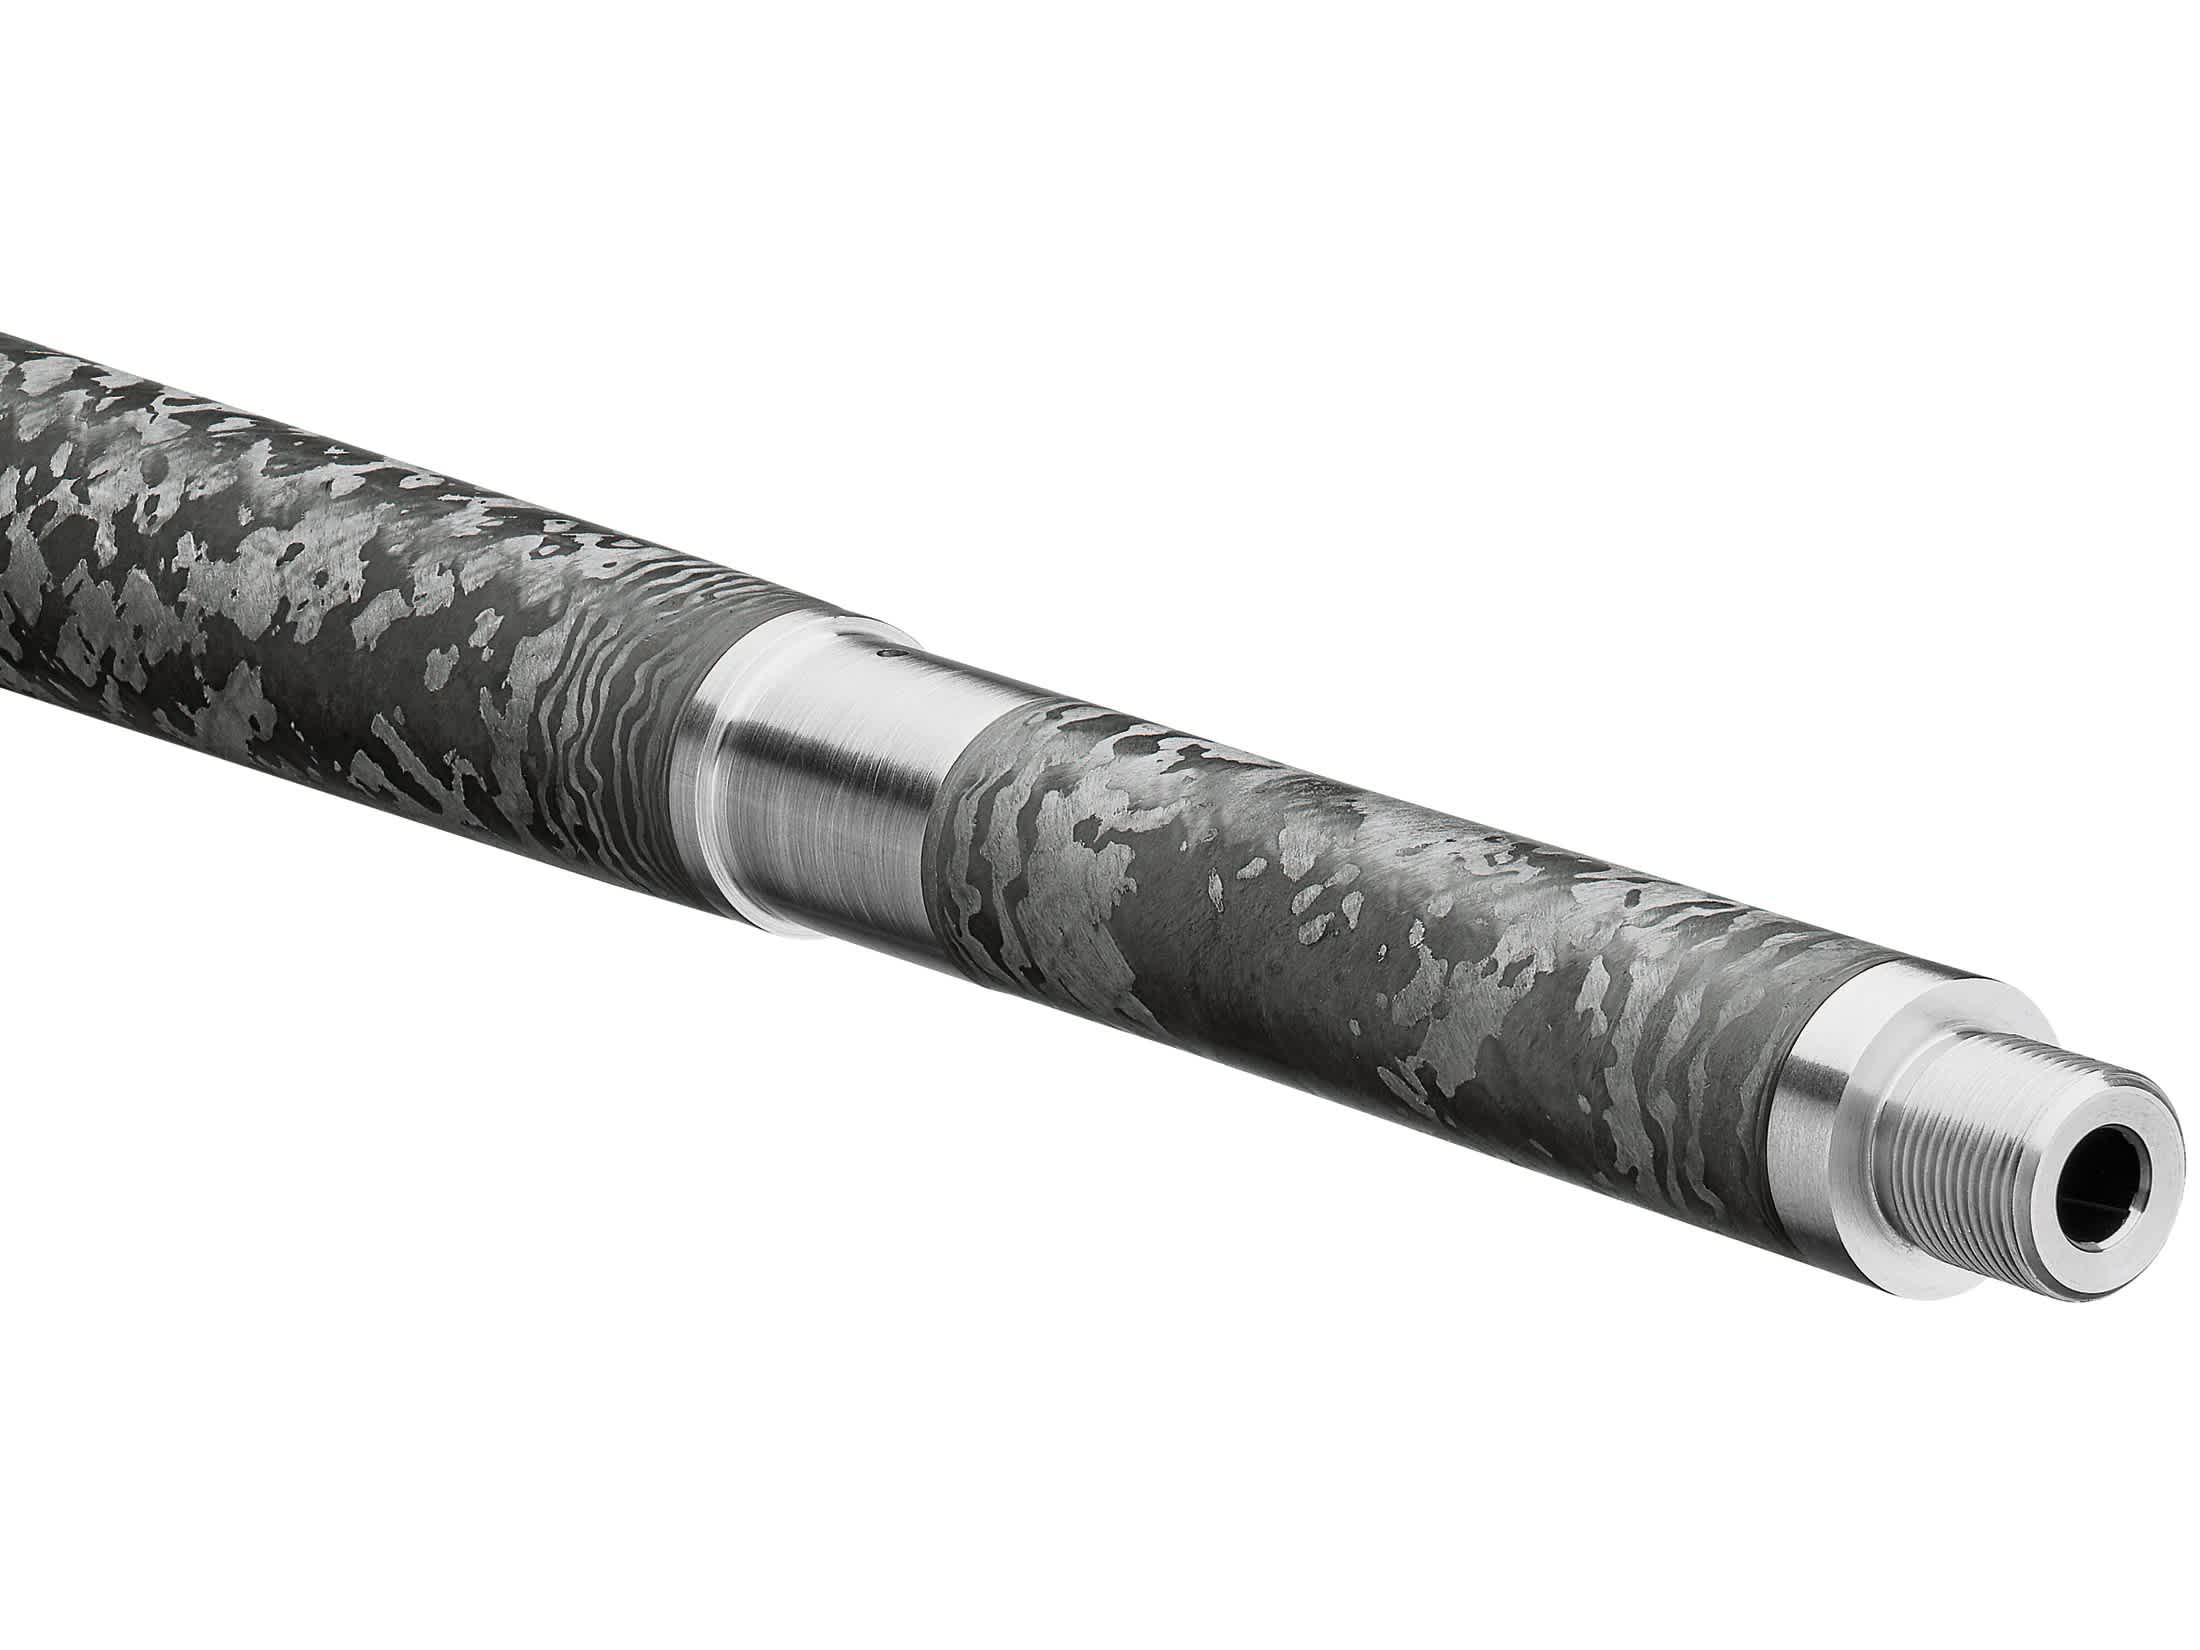 PROOF Research LR-308 308 Winchester Carbon Fiber Barrel